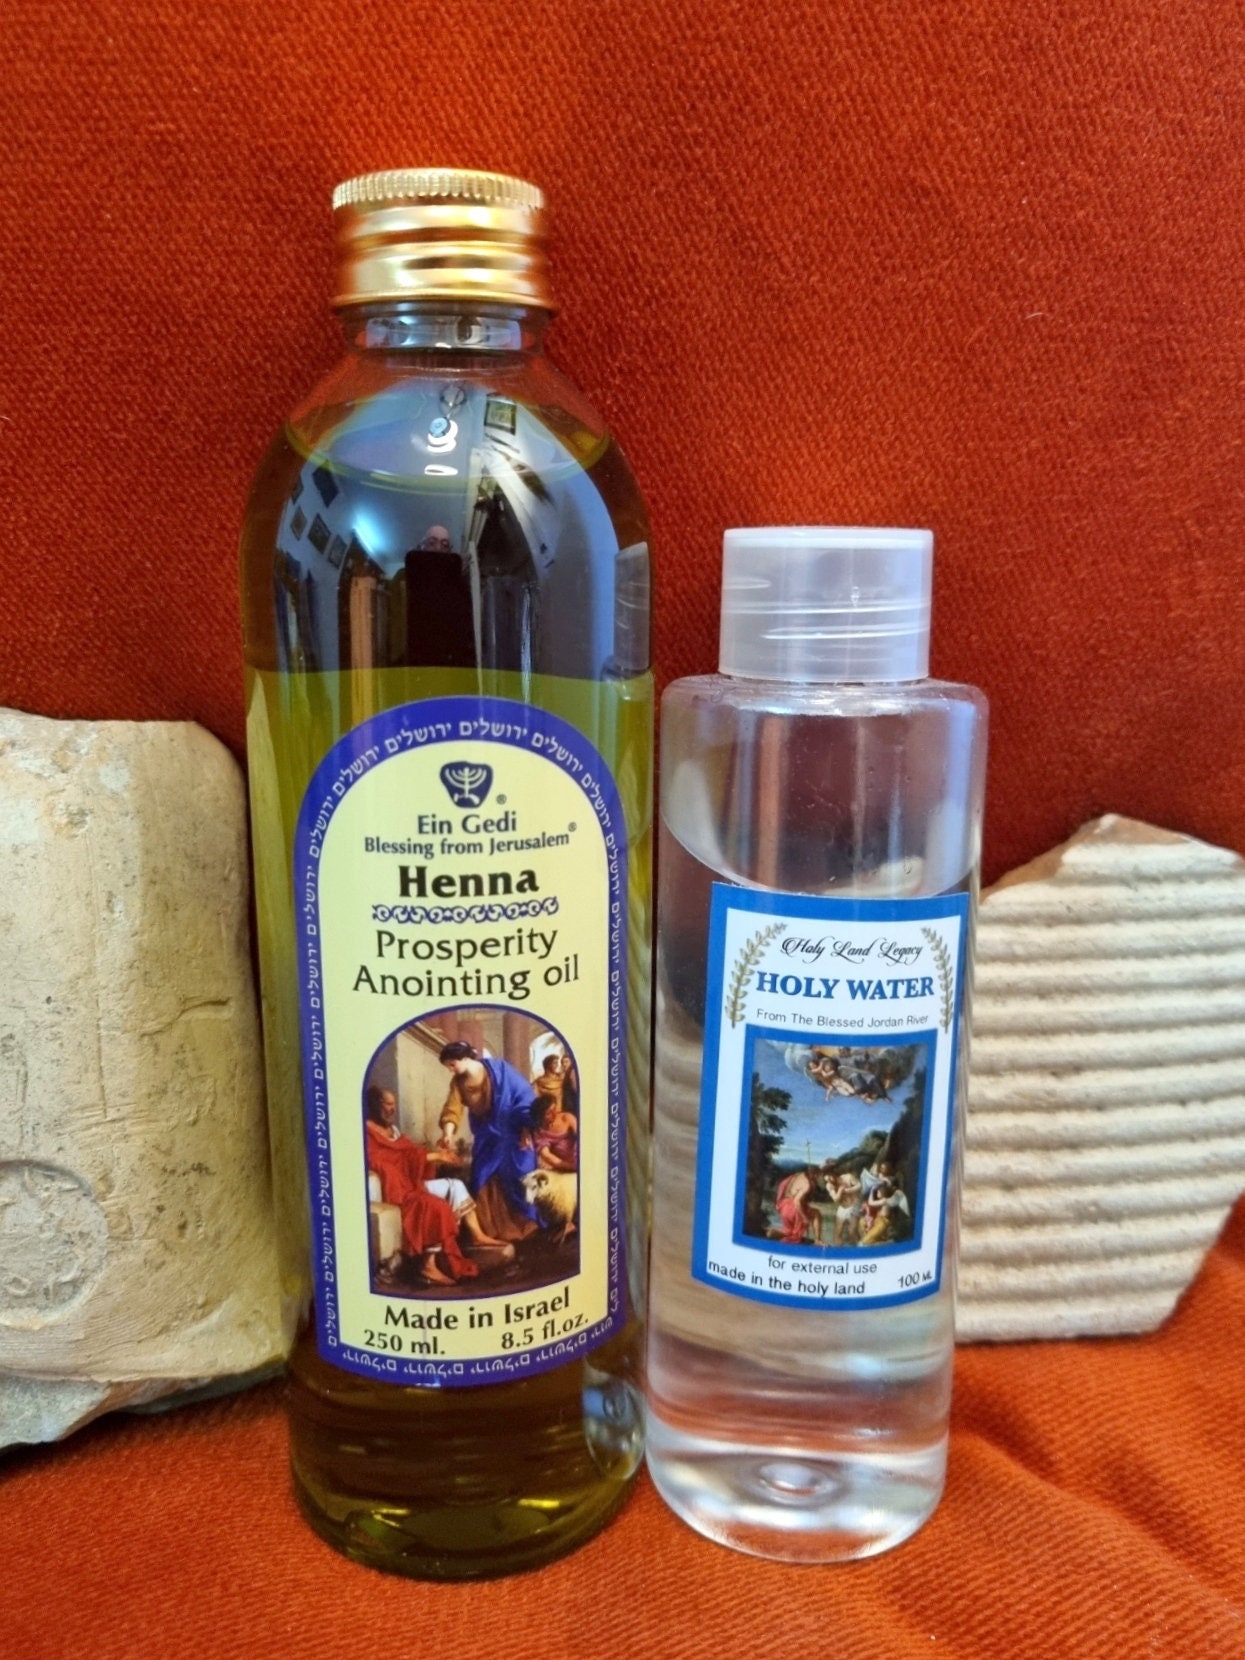 Anointing Oil Frankincense Myrrh and Spikenard (100 ml) by Ein Gedi Cosmetics